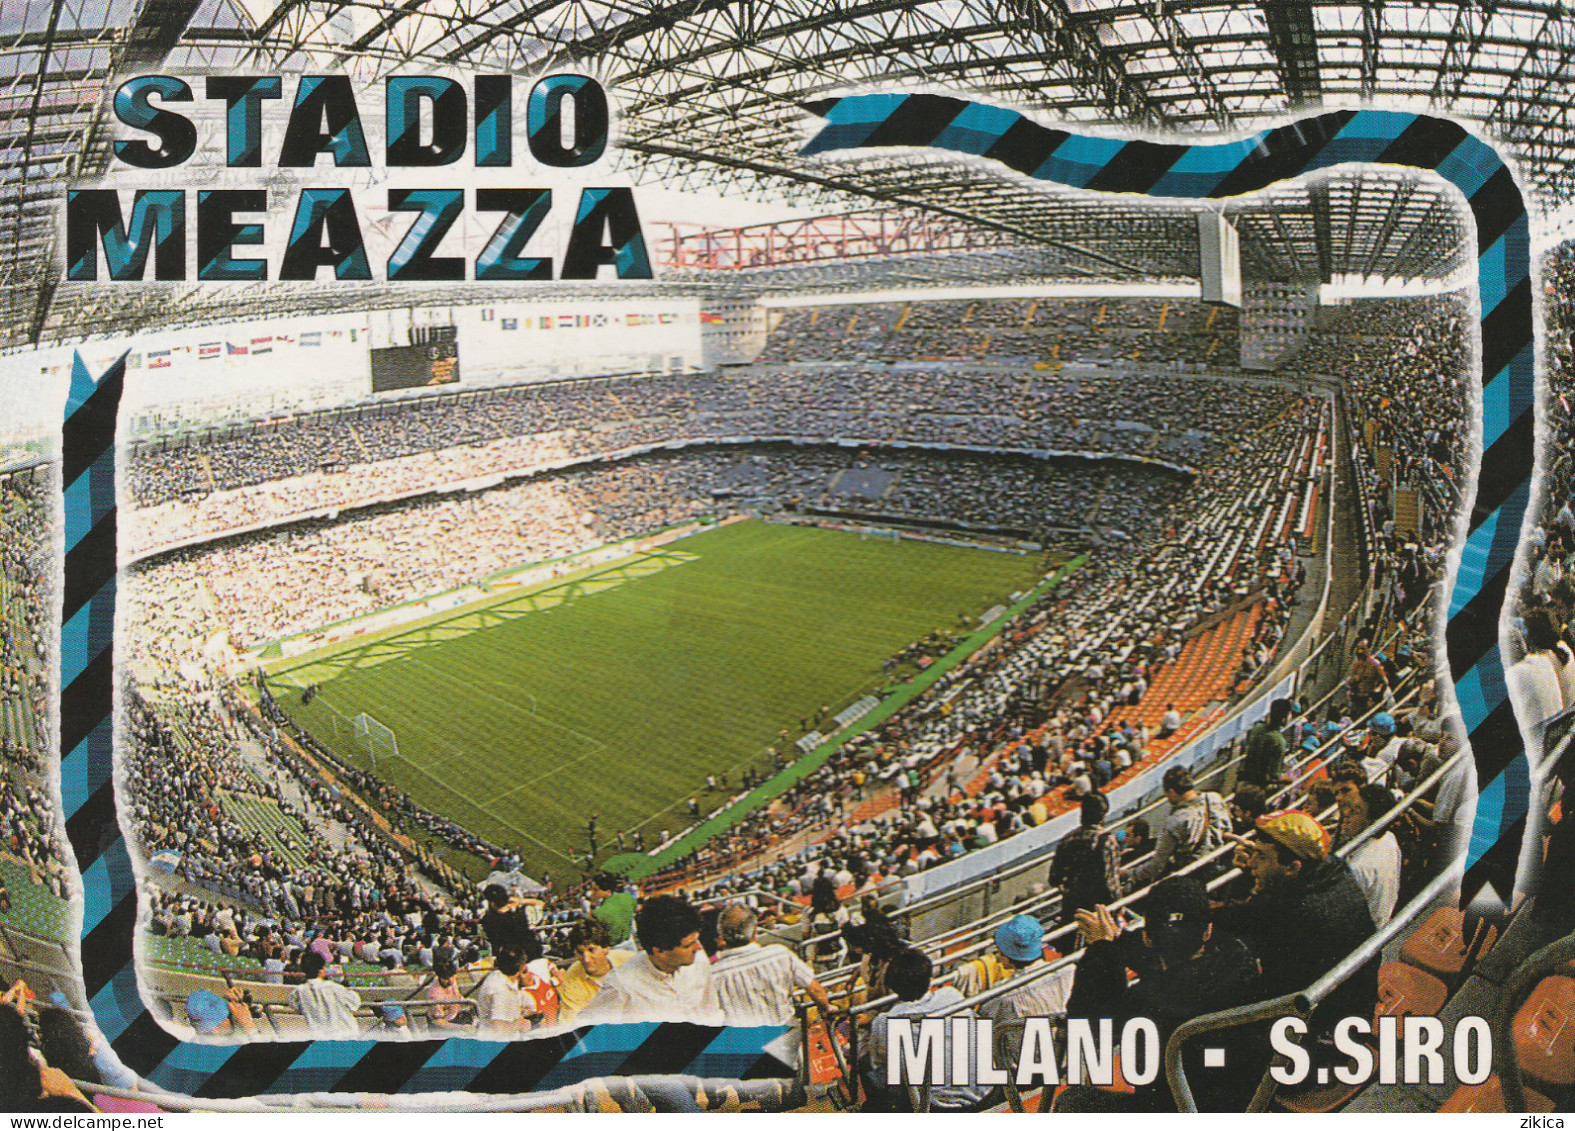 Stadion,Stadium,Le Stade,stade De Football,football Stadium : Meazza Milano,Italy,Italia,FC Internationale - Stadiums